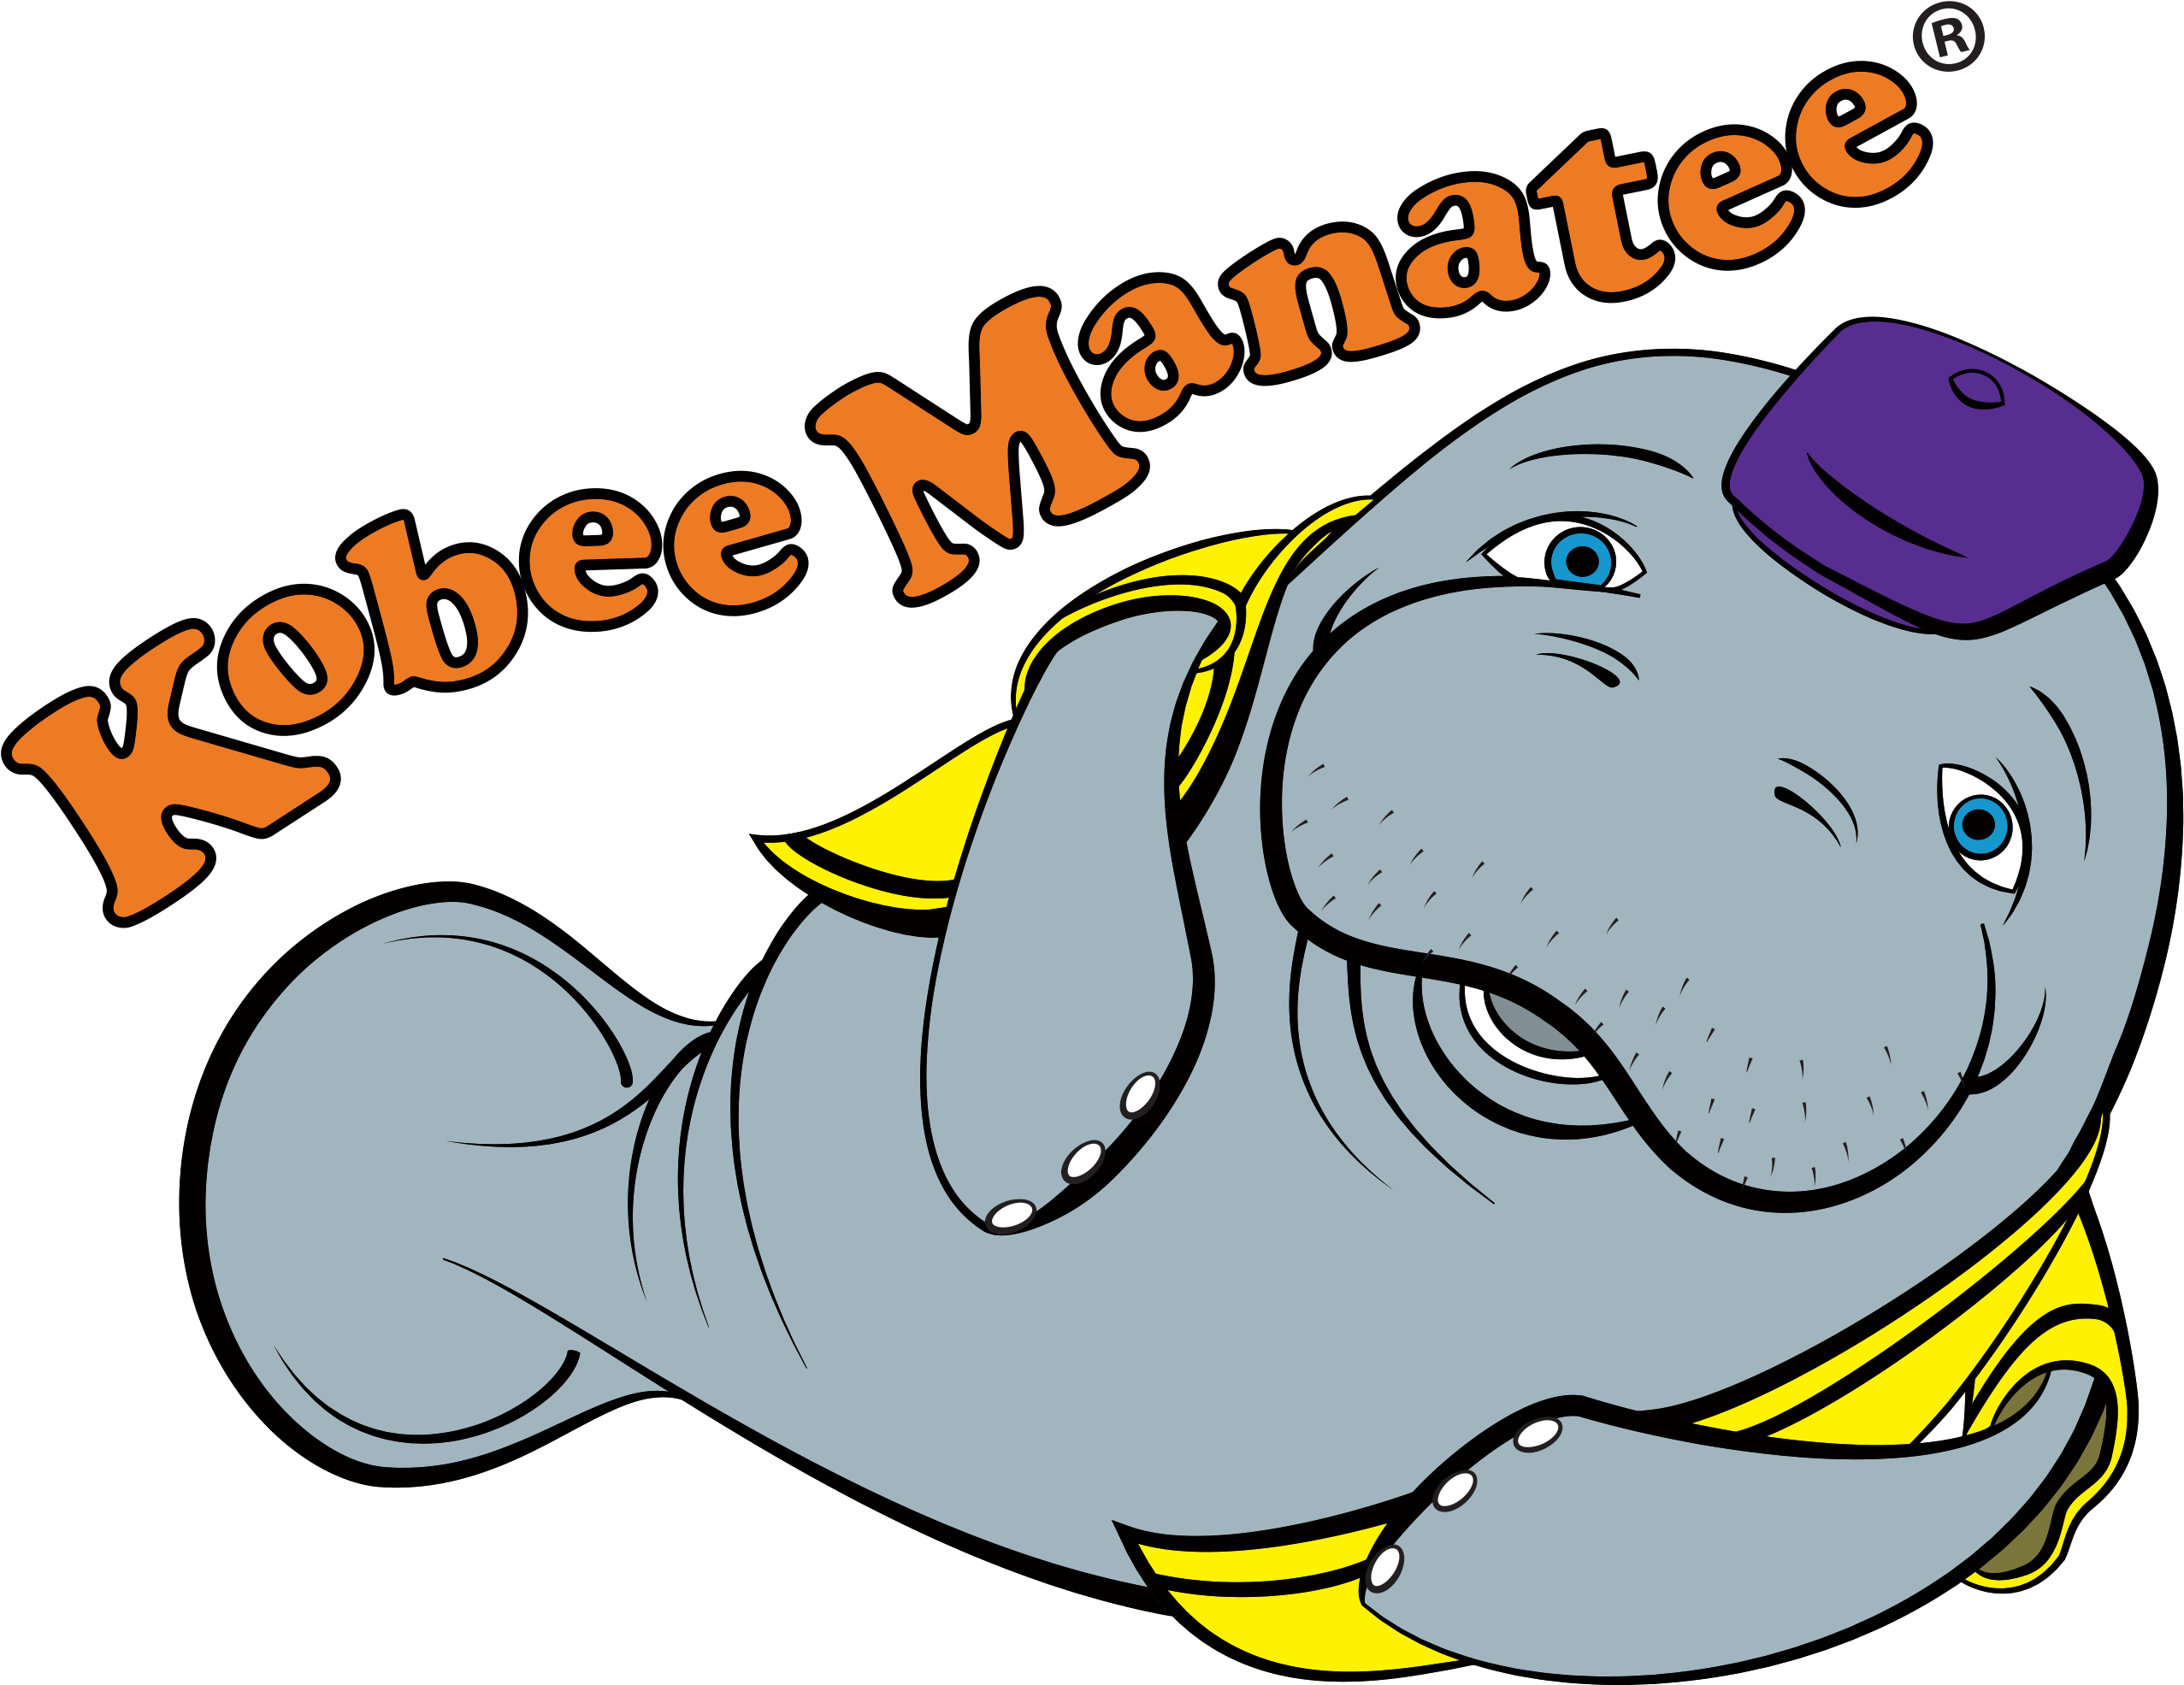 Kobee Manatee Logo - Kobee (2840x2268)